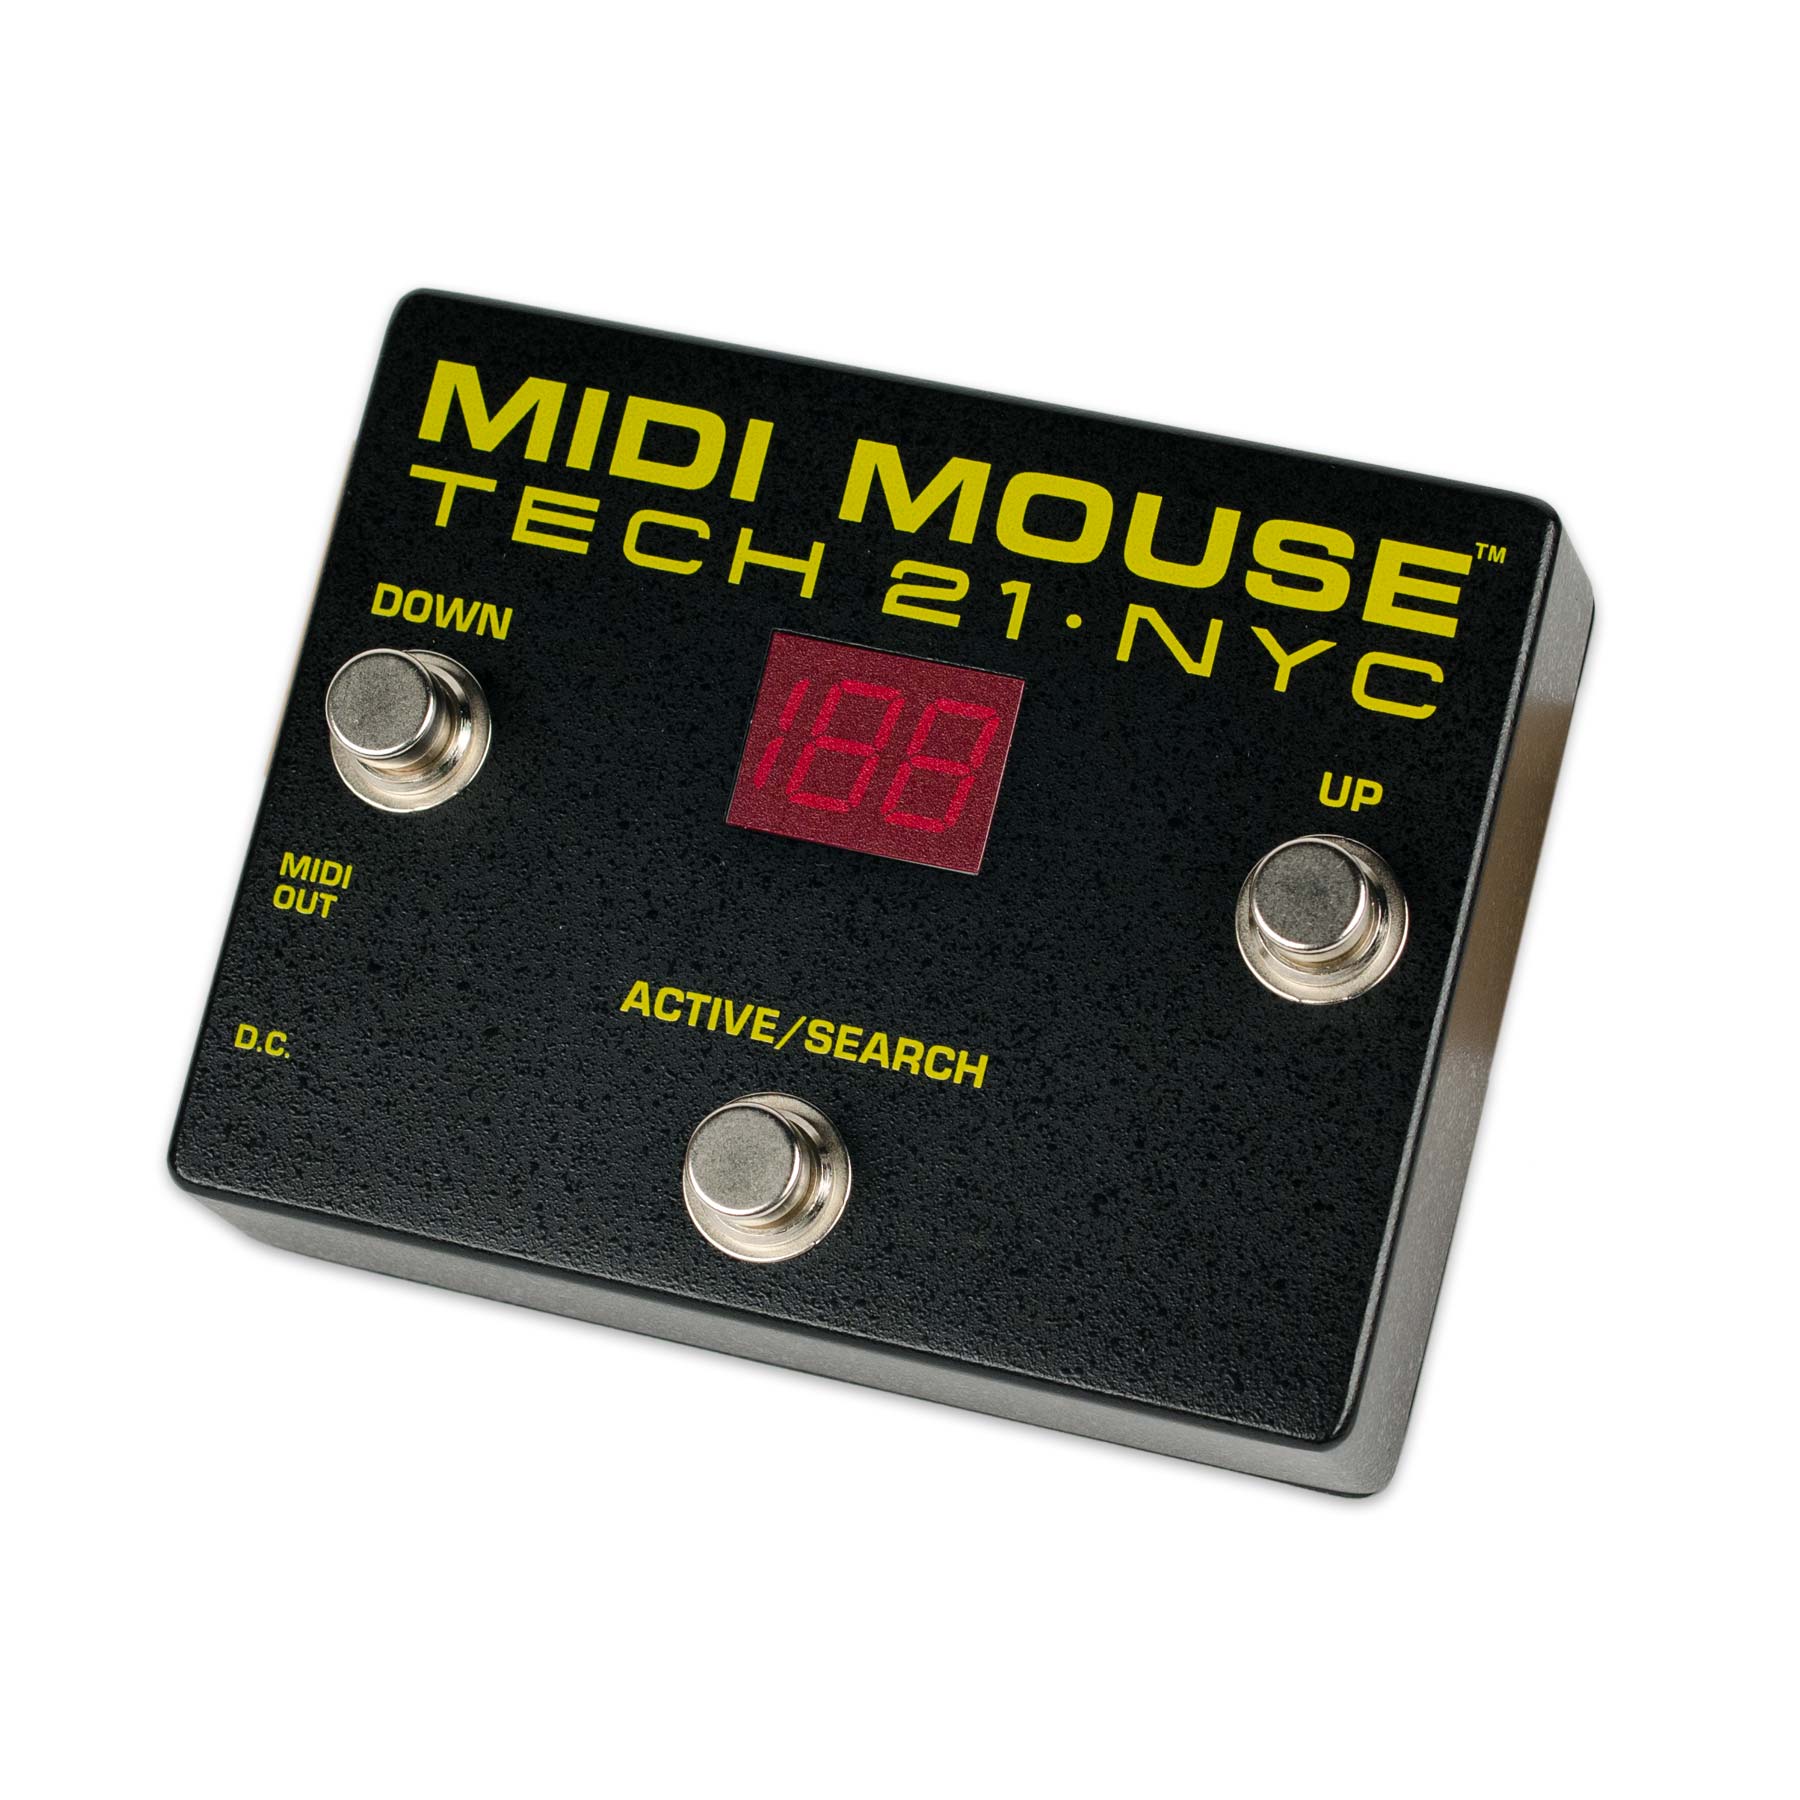 MIDI MOUSE/FOOTCONTROLLER